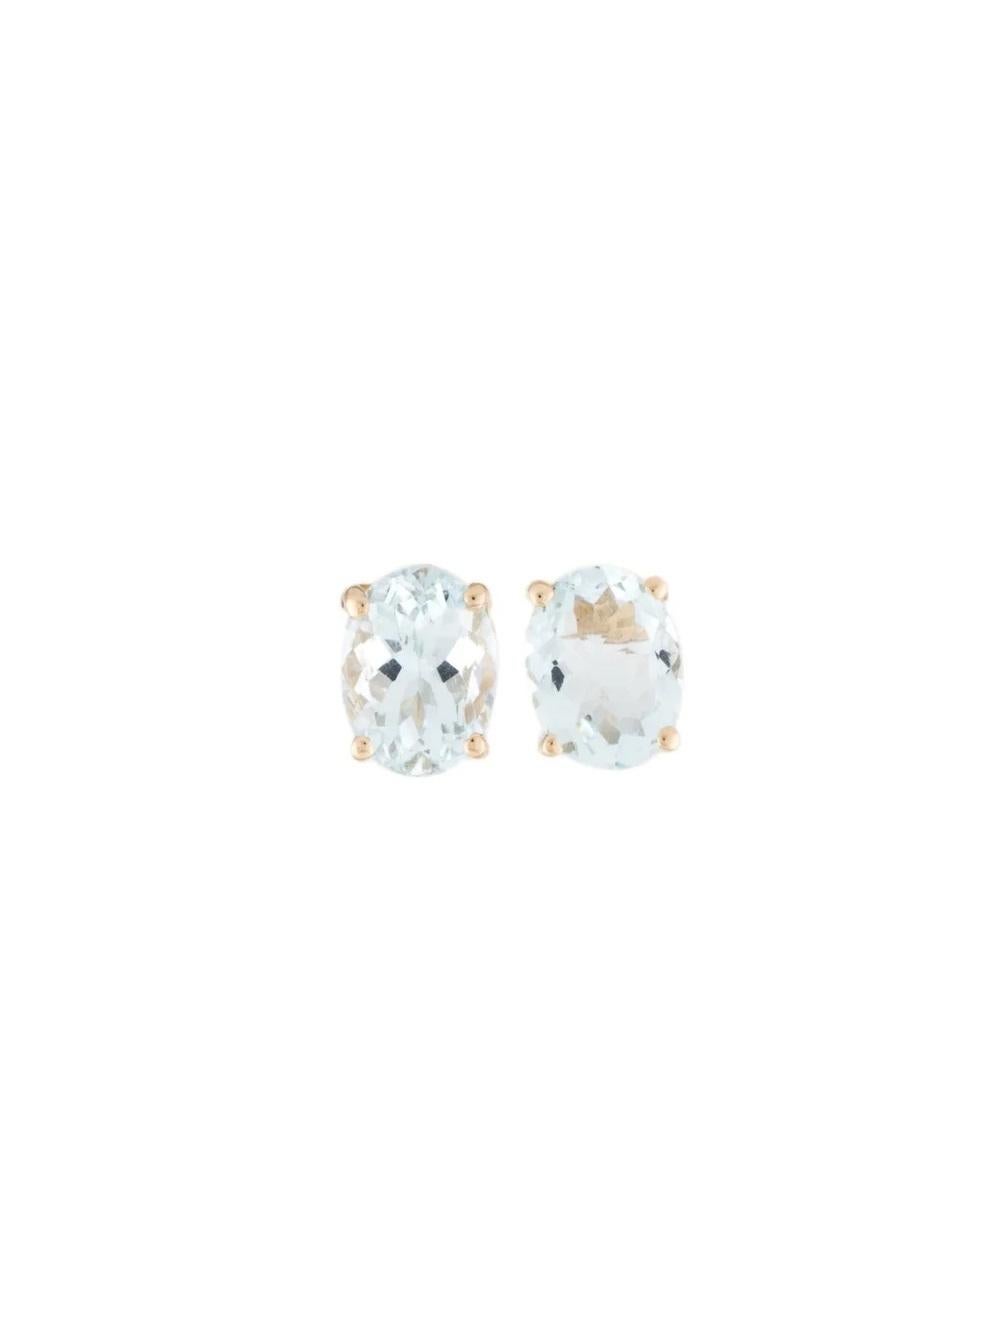 Oval Cut 14K Aquamarine Stud Earrings - Timeless Elegance, Elegant Statement Jewelry For Sale